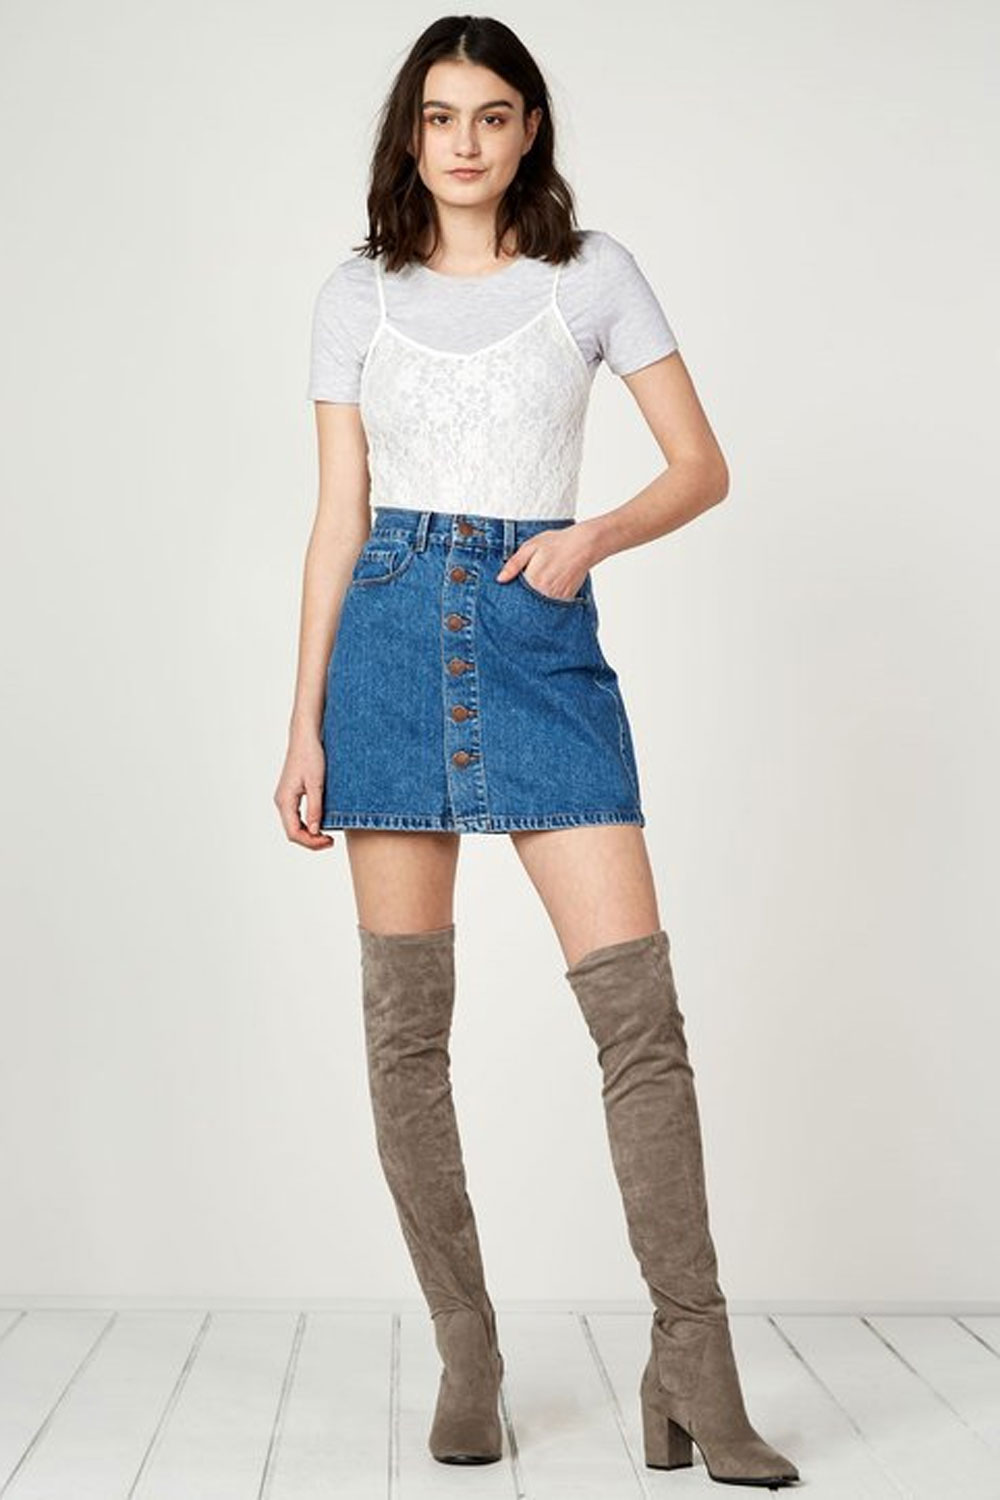 denim skirt with thigh high boots